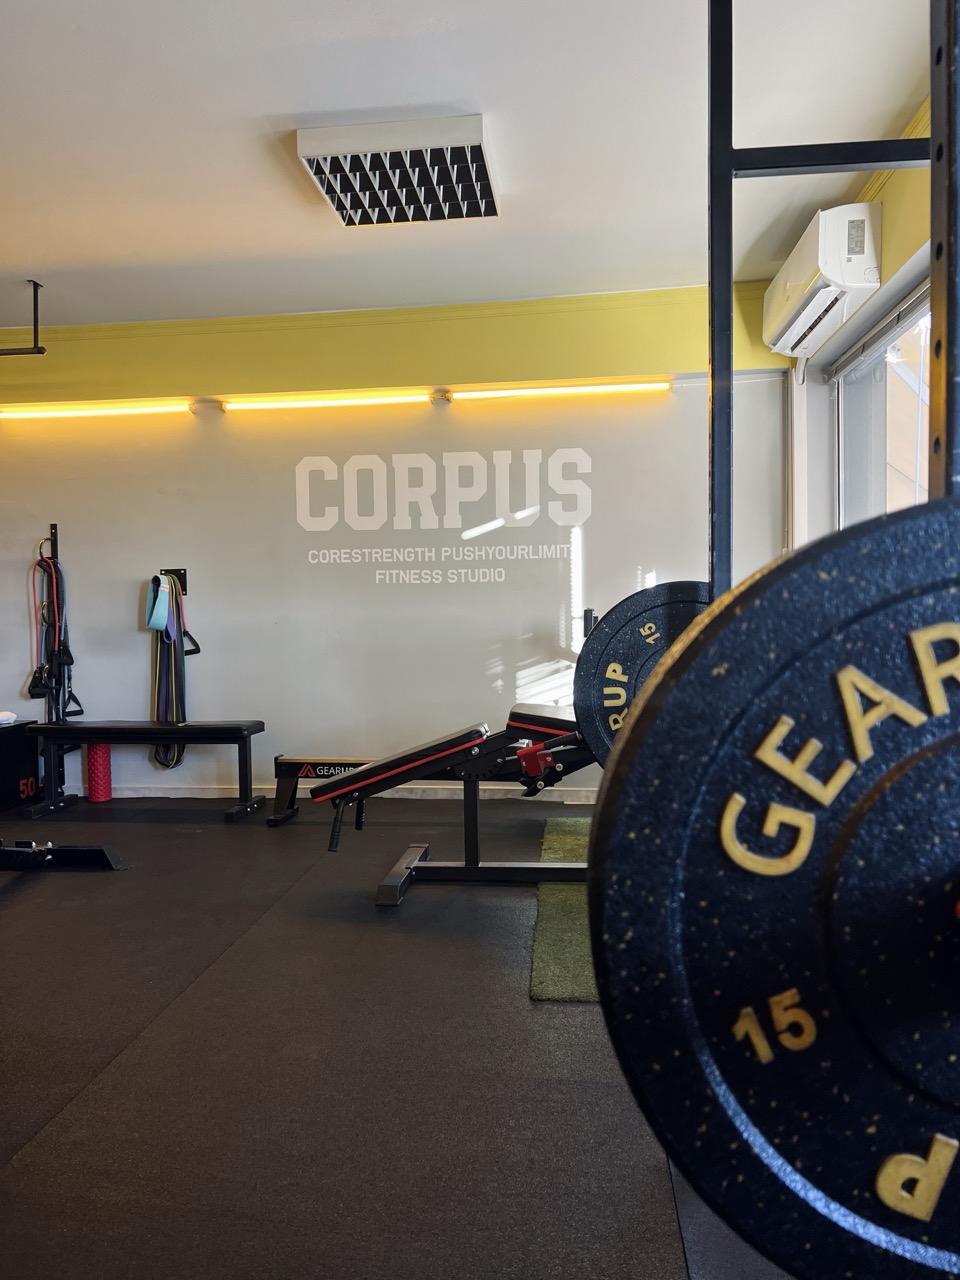 corpus-fitness-studio-personal-and-small-group-training-vrilissia-sportshunter-10 Large